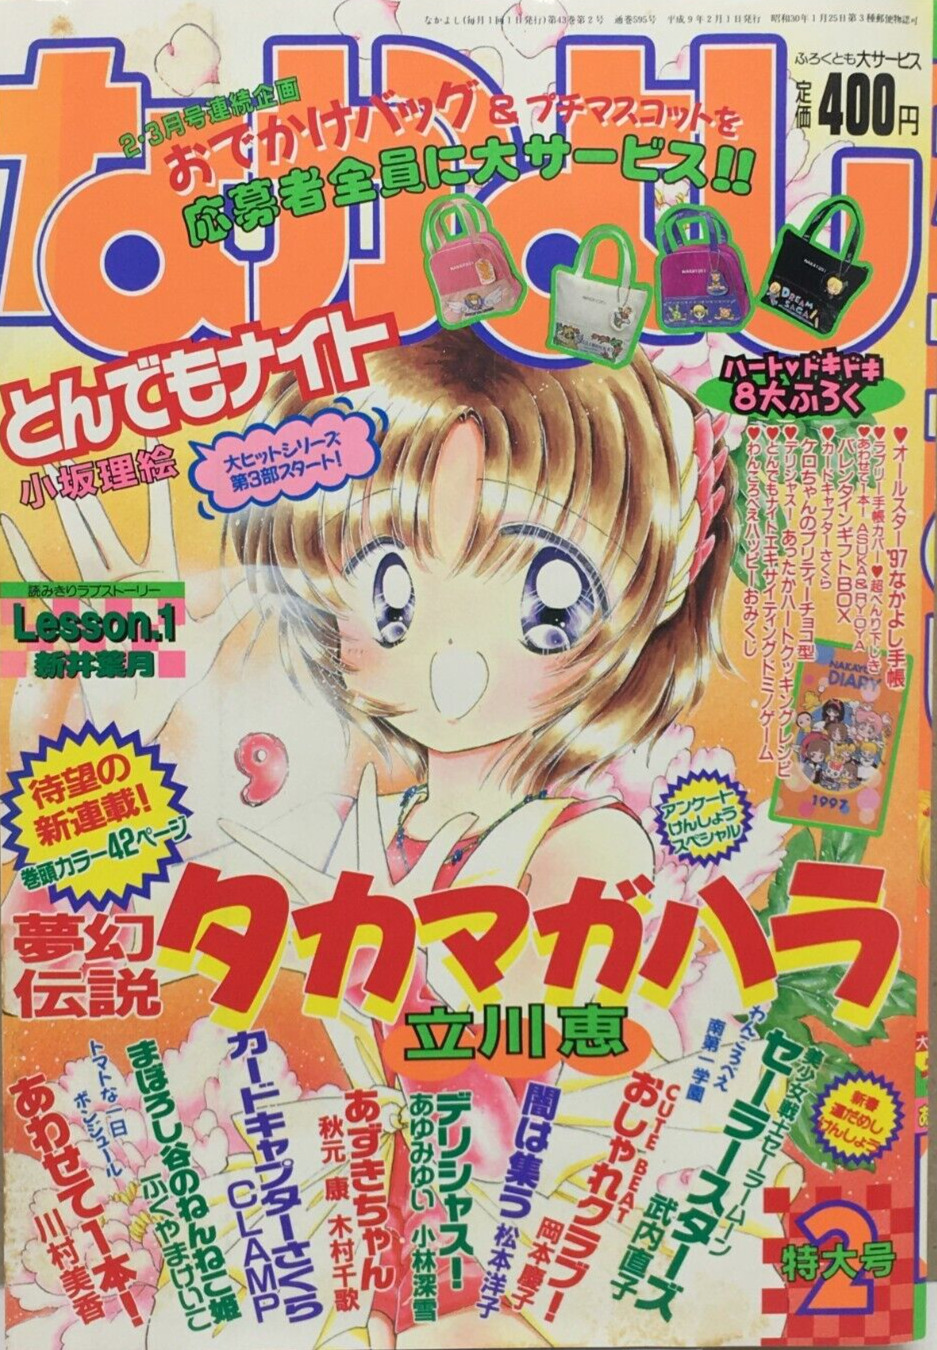 Dream Saga Cover First Episode Nakayoshi 1997 February Magazine Megumi Tachikawa